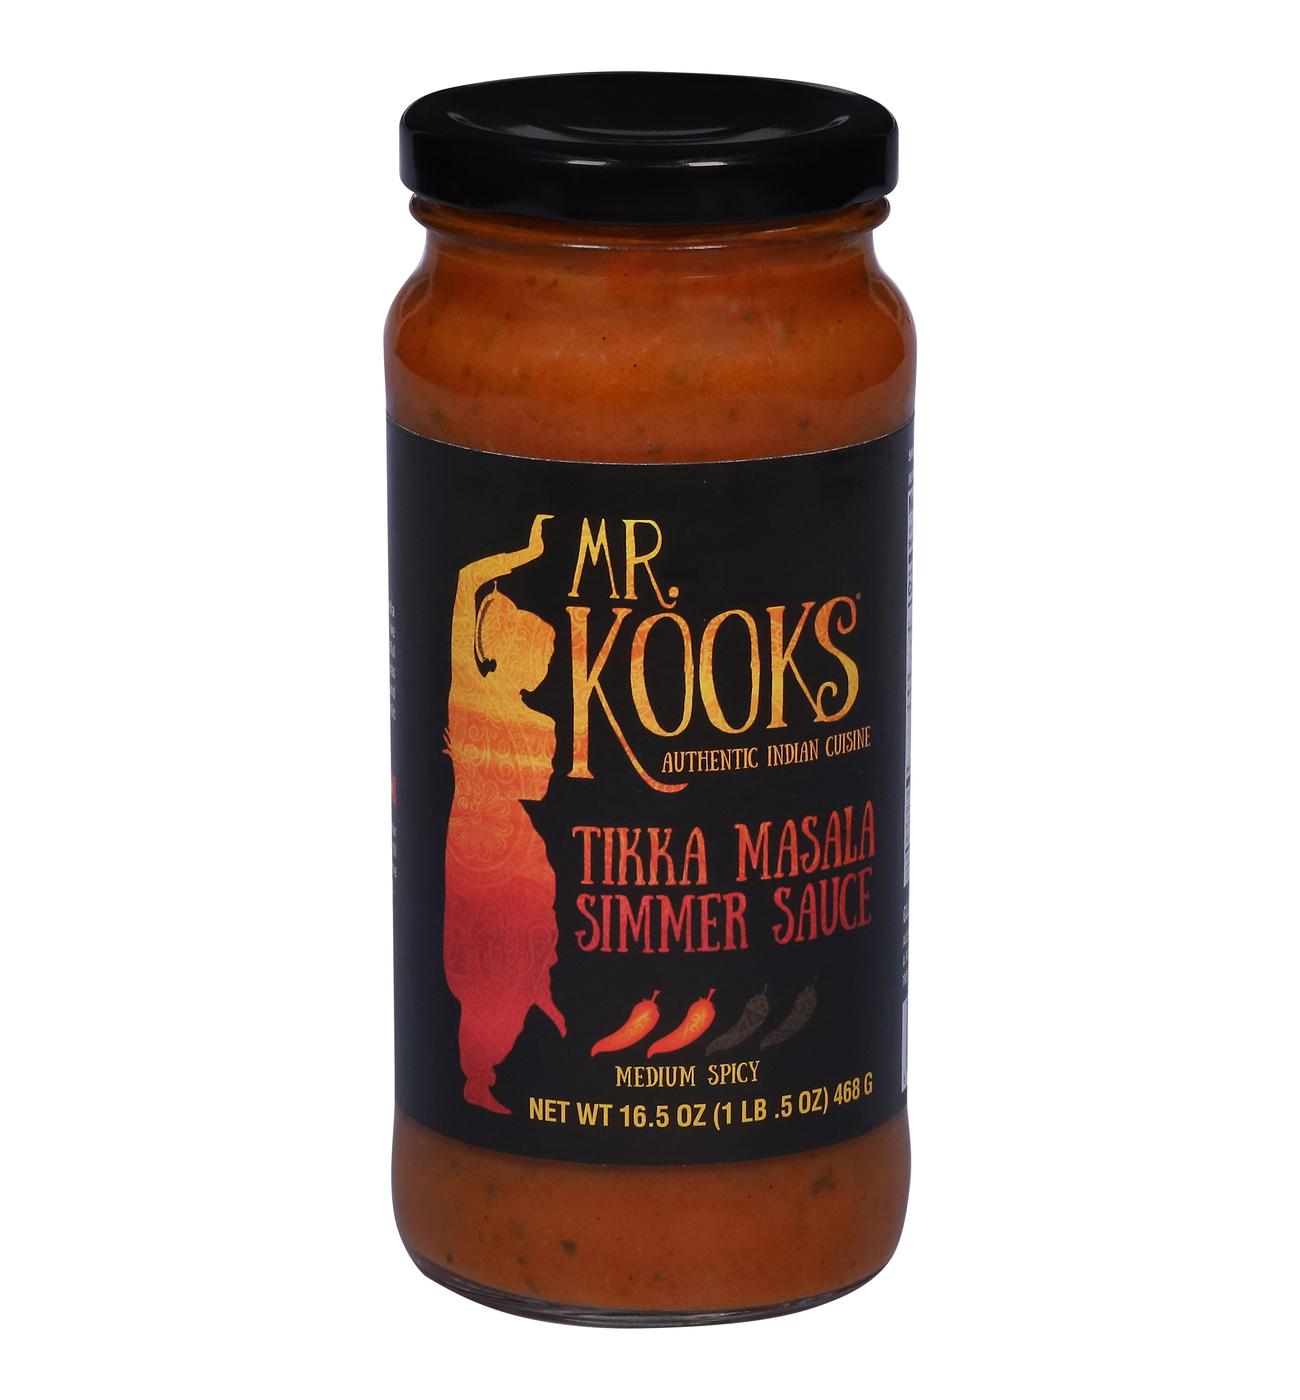 Mr. Kooks Tikka Masala Simmer Sauce; image 1 of 2